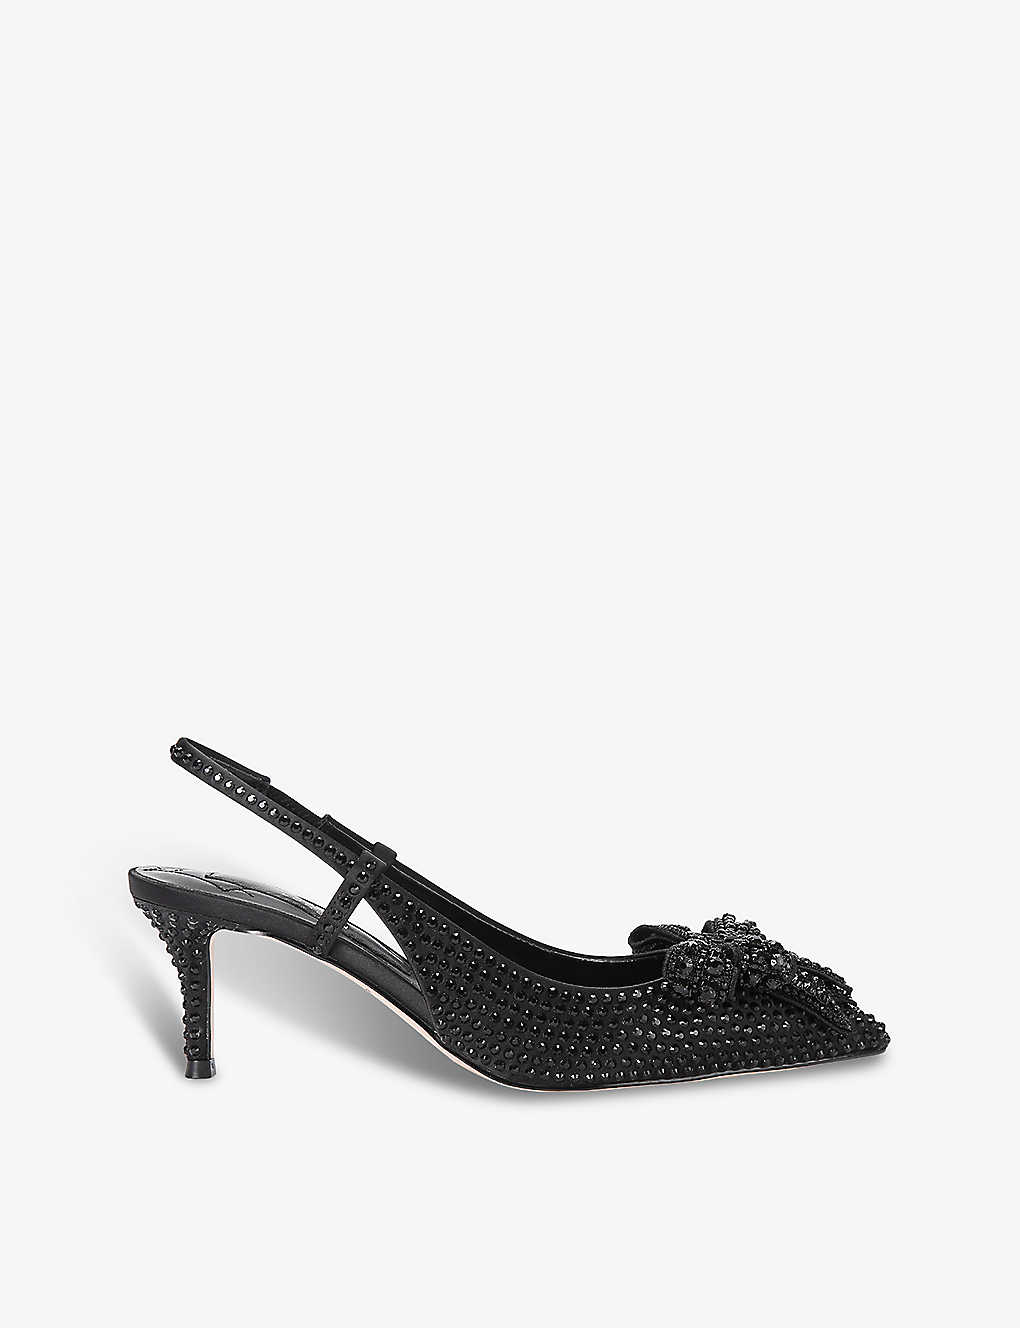 Shop Kurt Geiger London Women's Black Belgravia Crystal-embellished Bow Heeled Satin Sandals